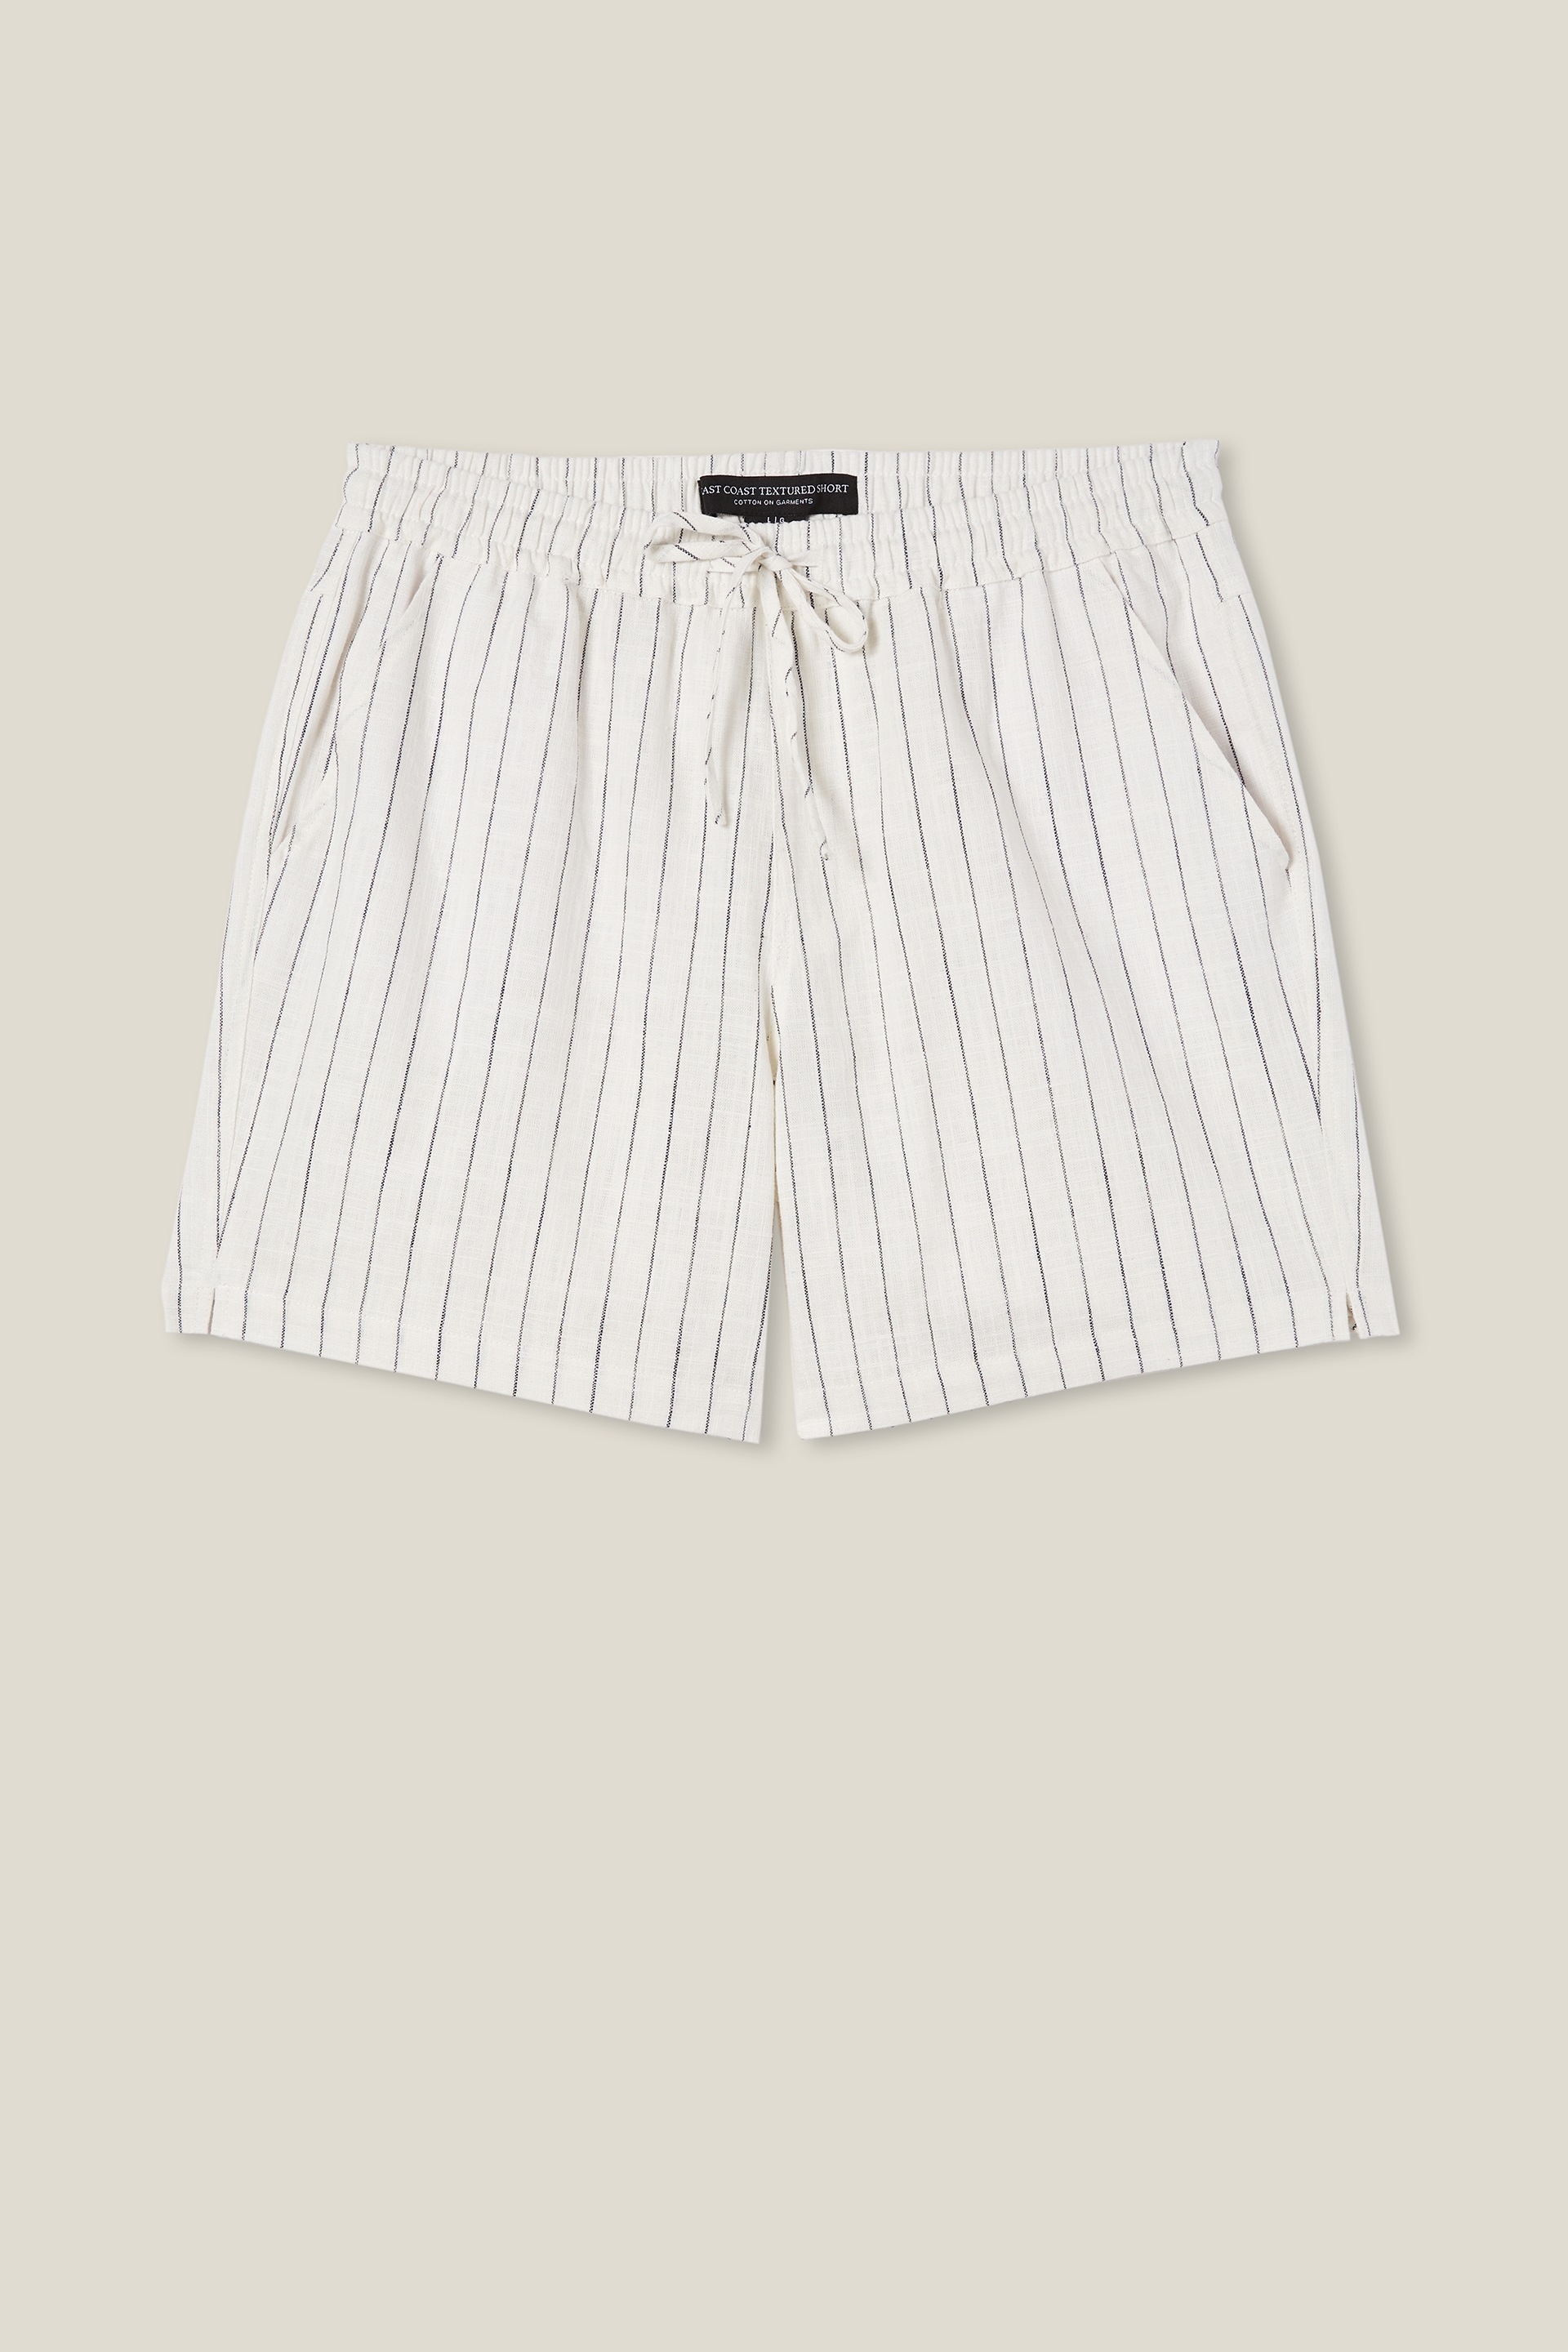 Cotton On Men - East Coast Textured Short - White stripe